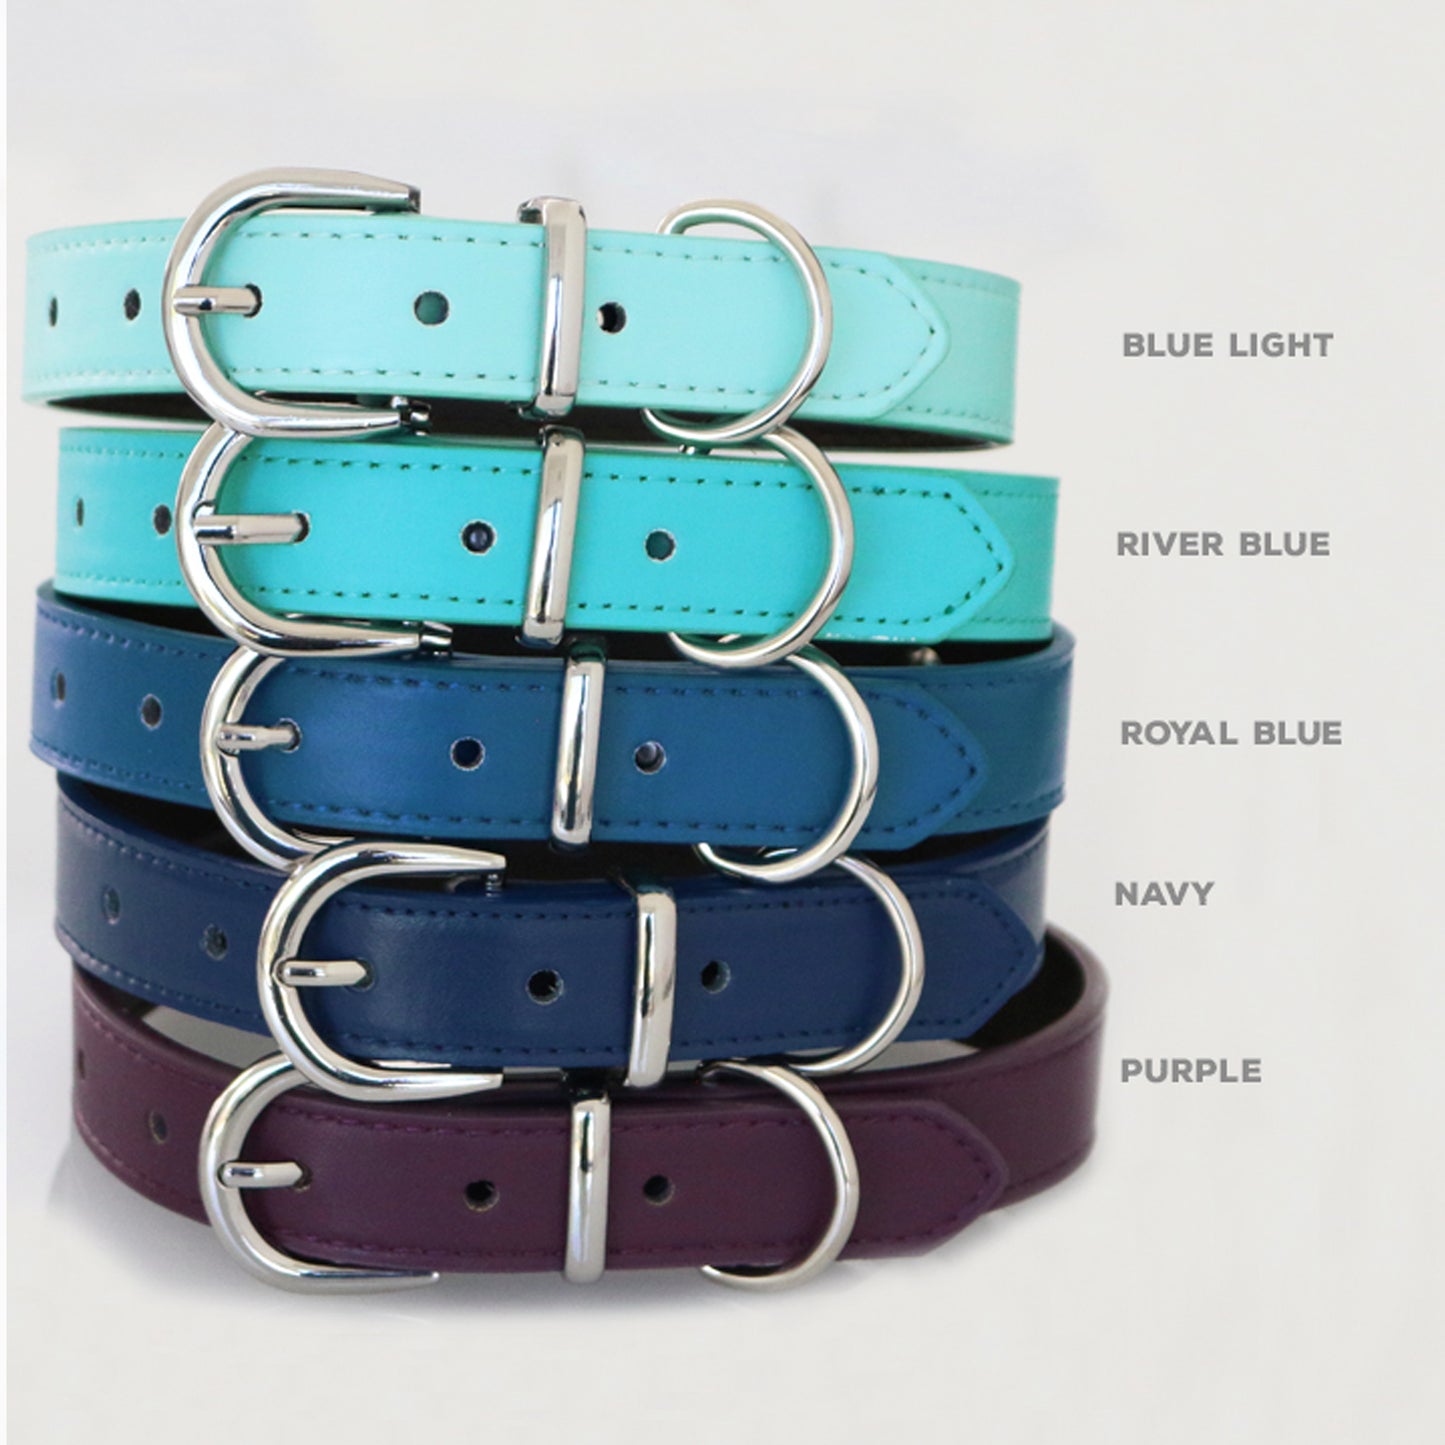 Blue Flower dog collar, Handmade flower leather collar, Dog ring bearer proposal XS to XXL collar, Puppy Girl flower collar , Wedding dog collar